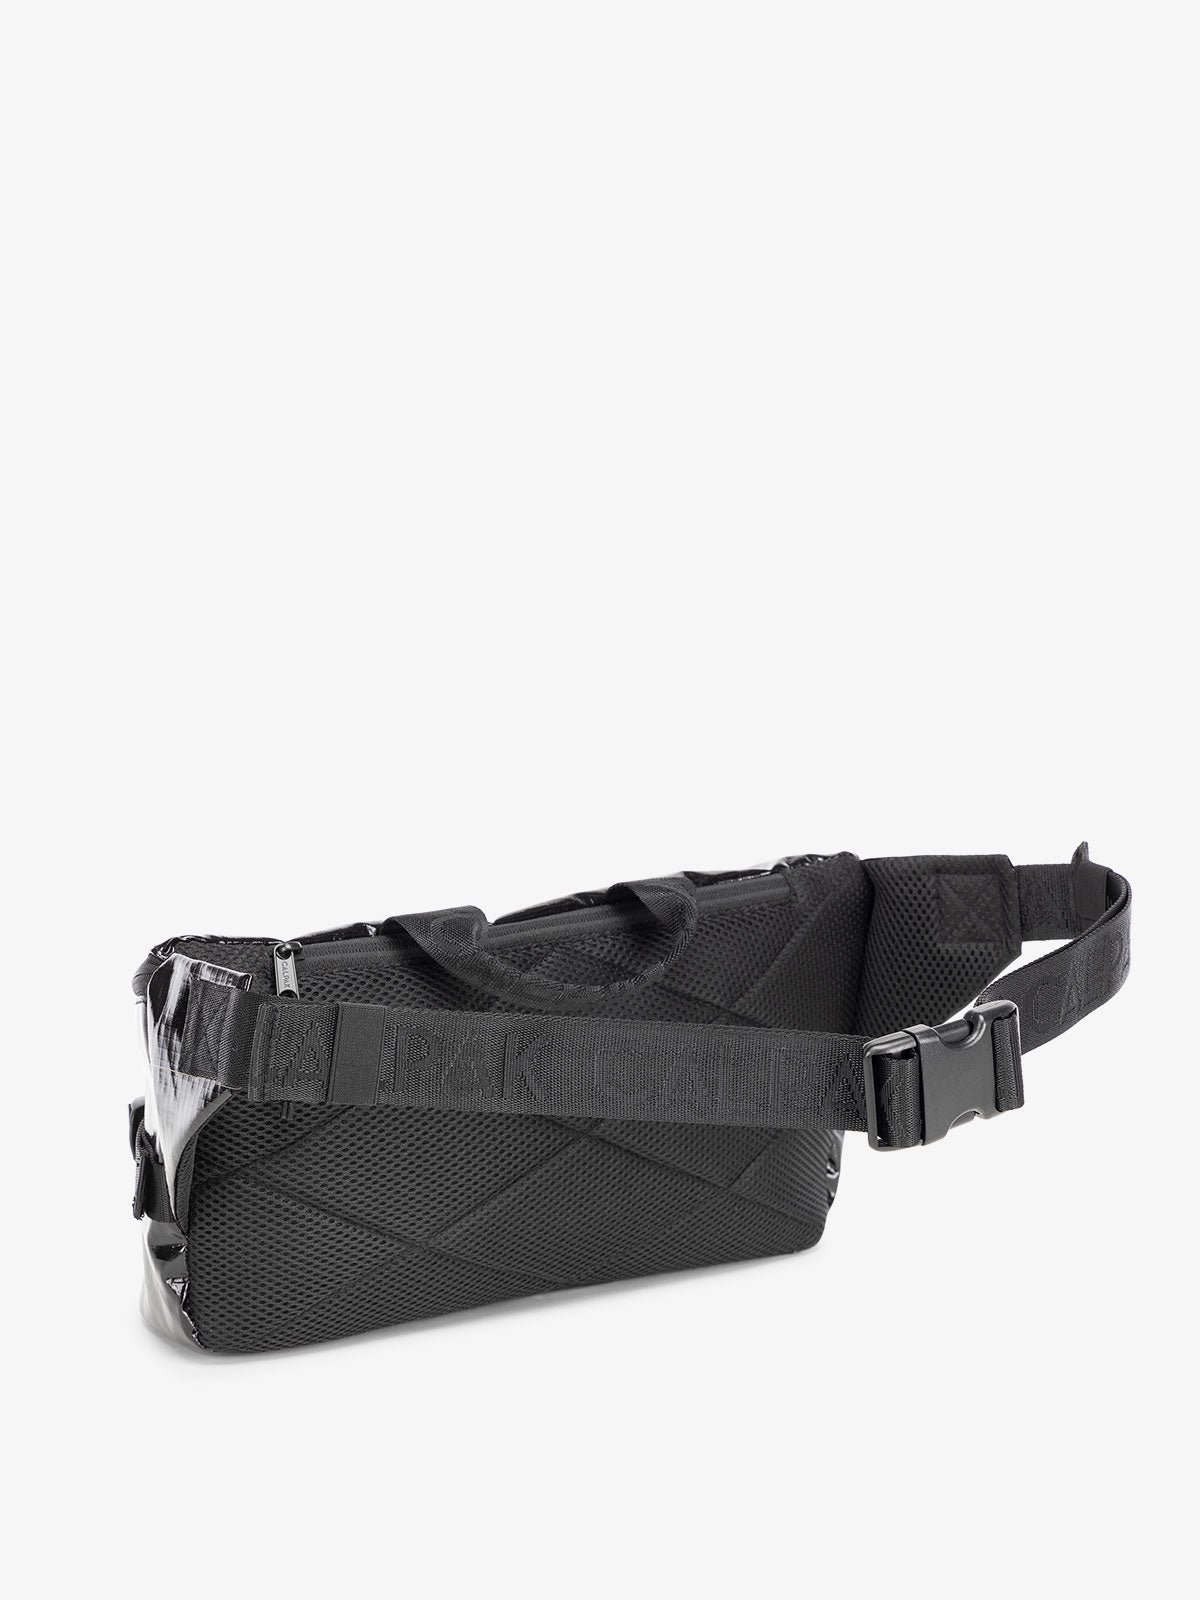 sling bag with adjustable crossbody strap